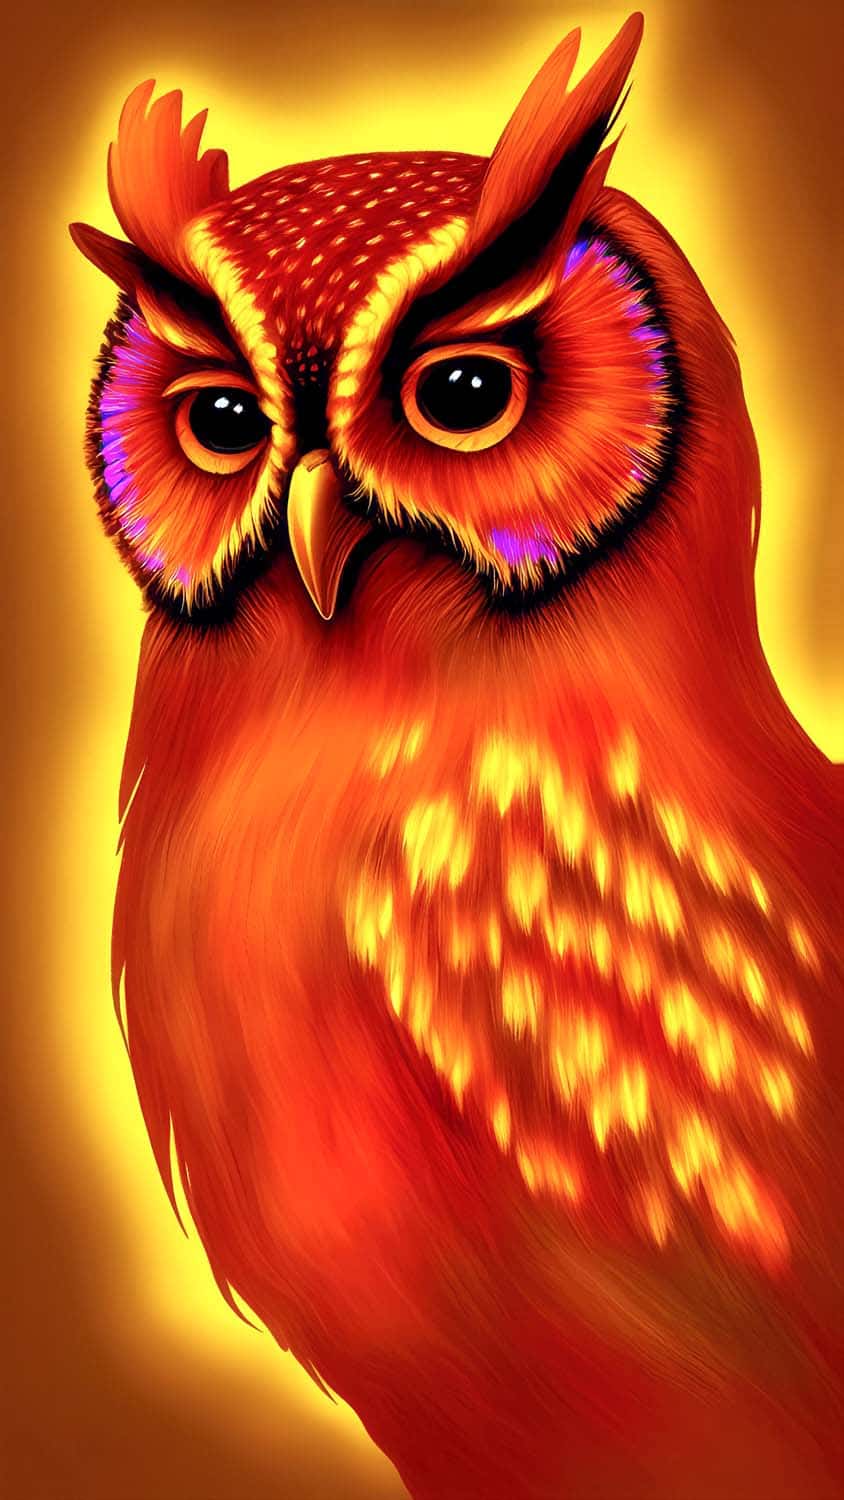 Supreme Owl iPhone Wallpaper HD